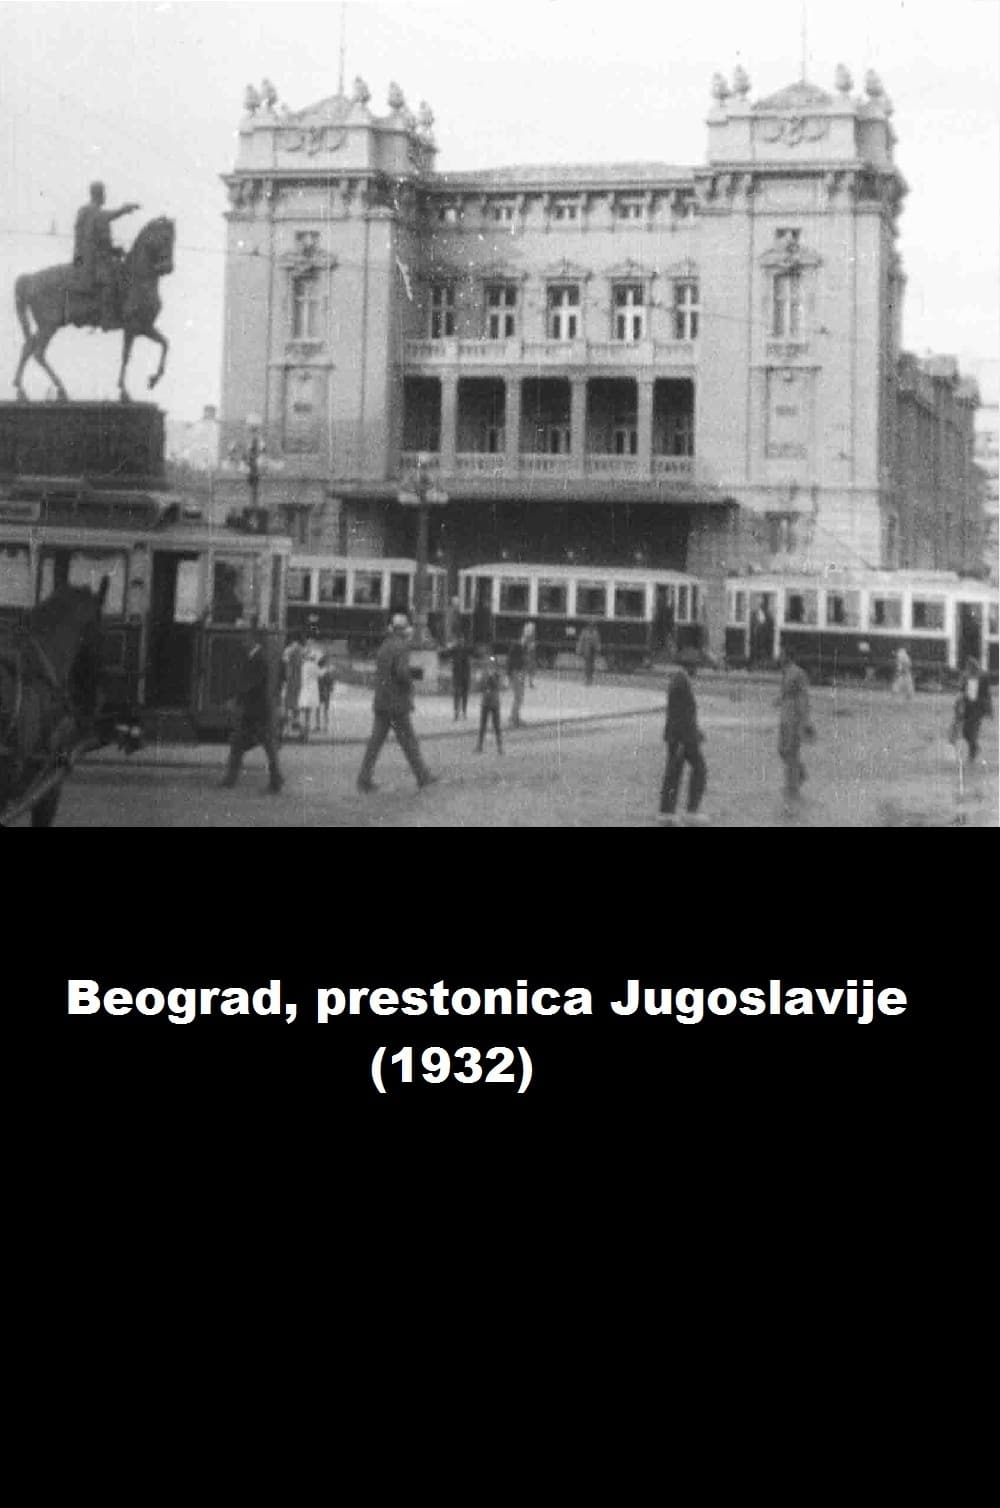 Belgrade, Capital of the Kingdom of Yugoslavia